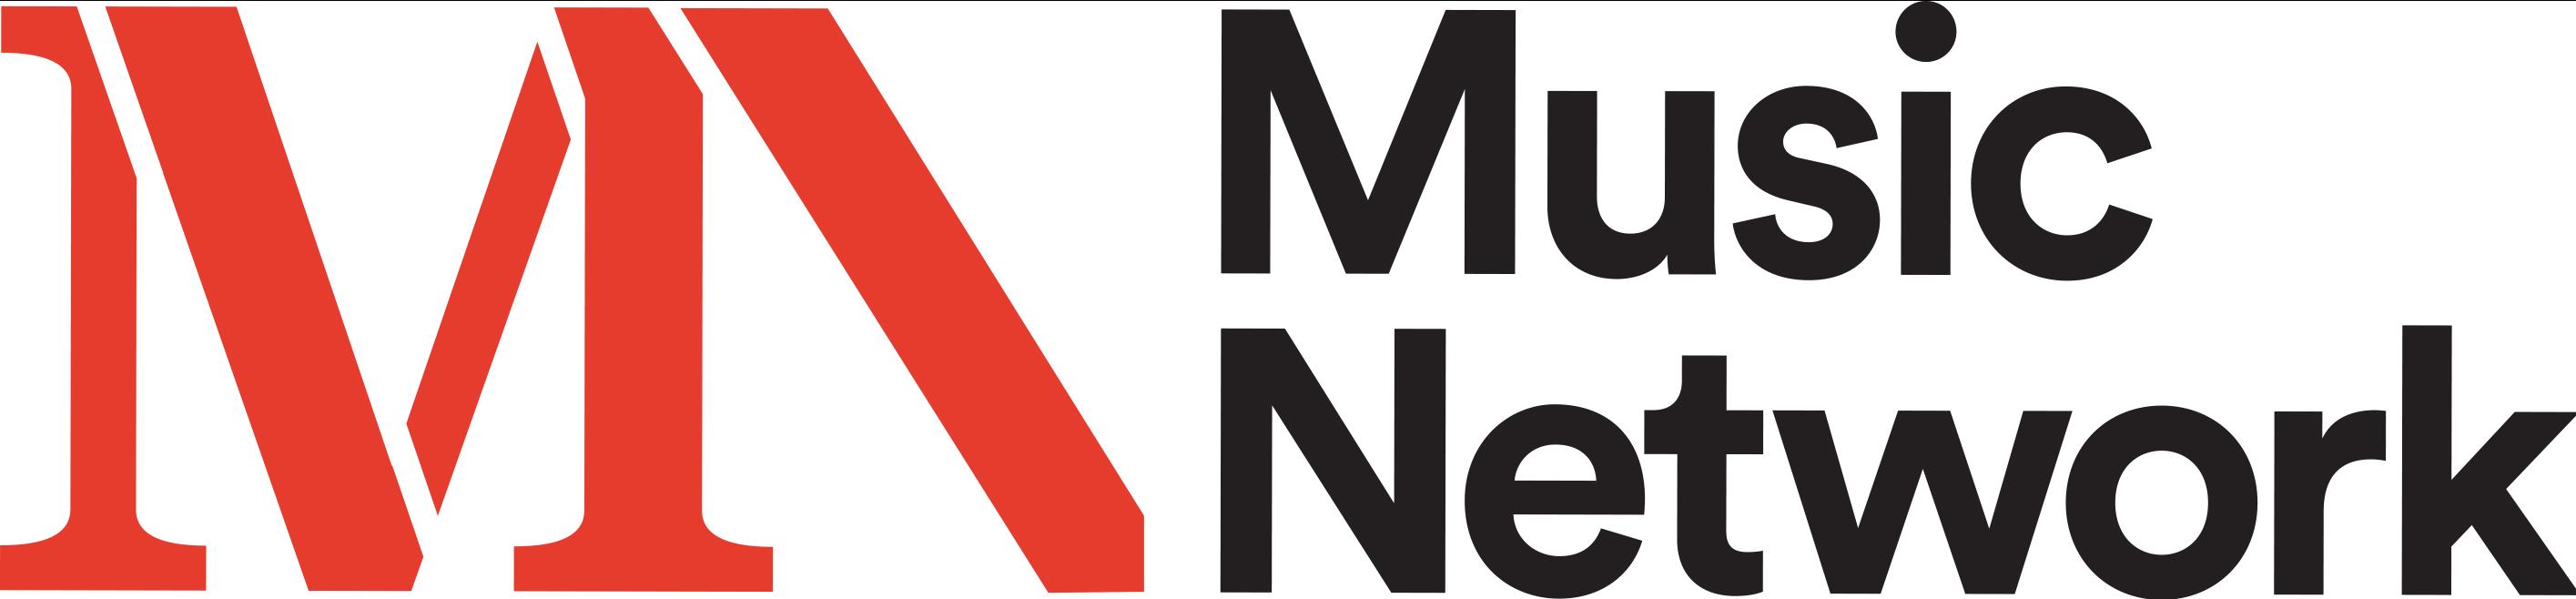 Music Network logo 